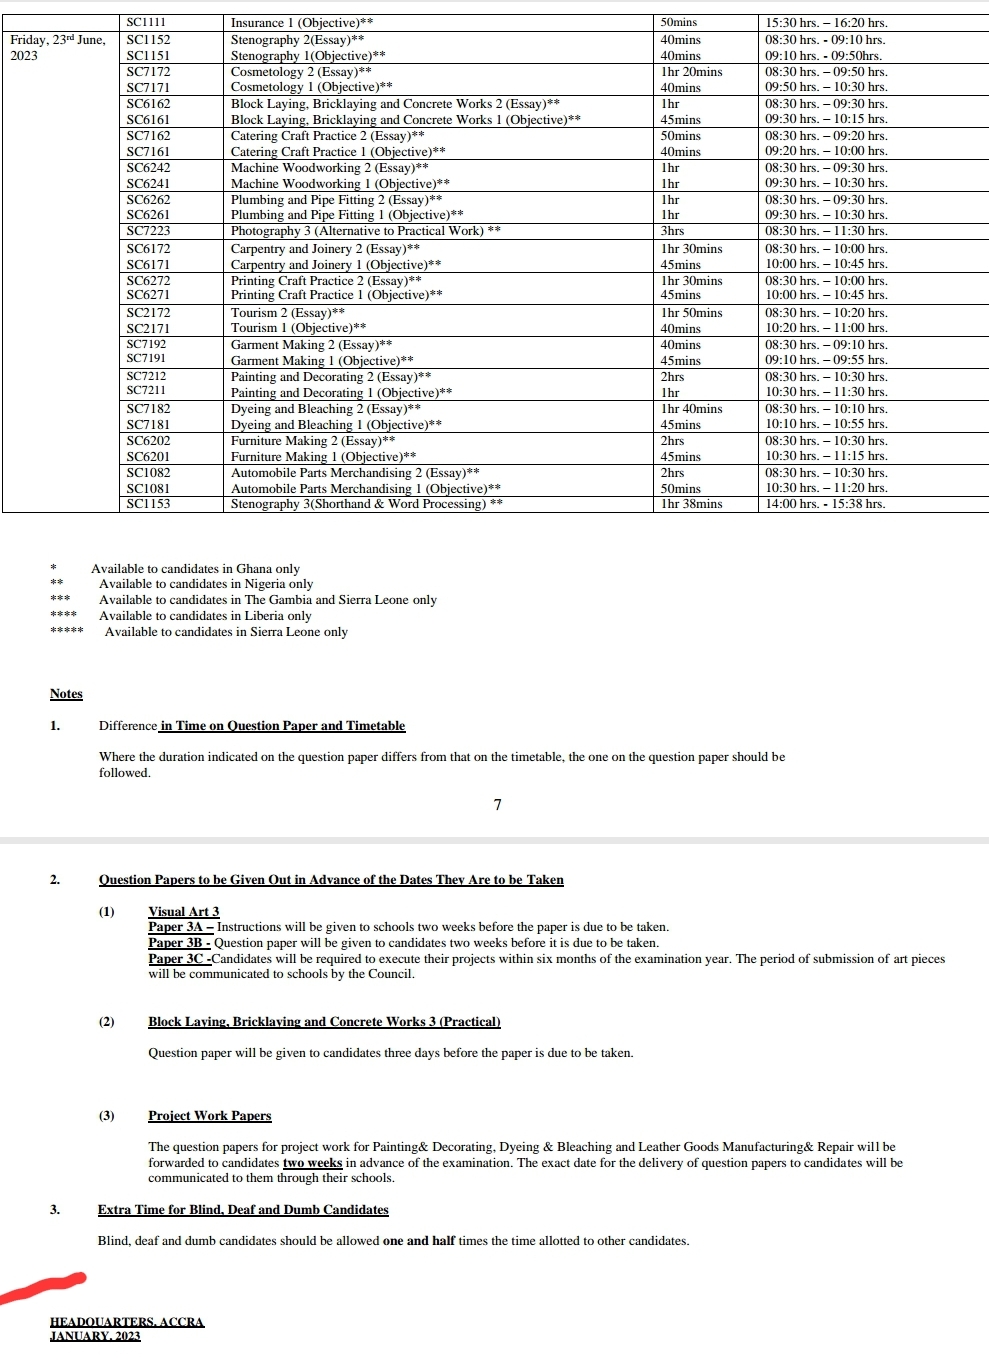 WAEC Timetable For 2023/2024 May/June (Download PDF)